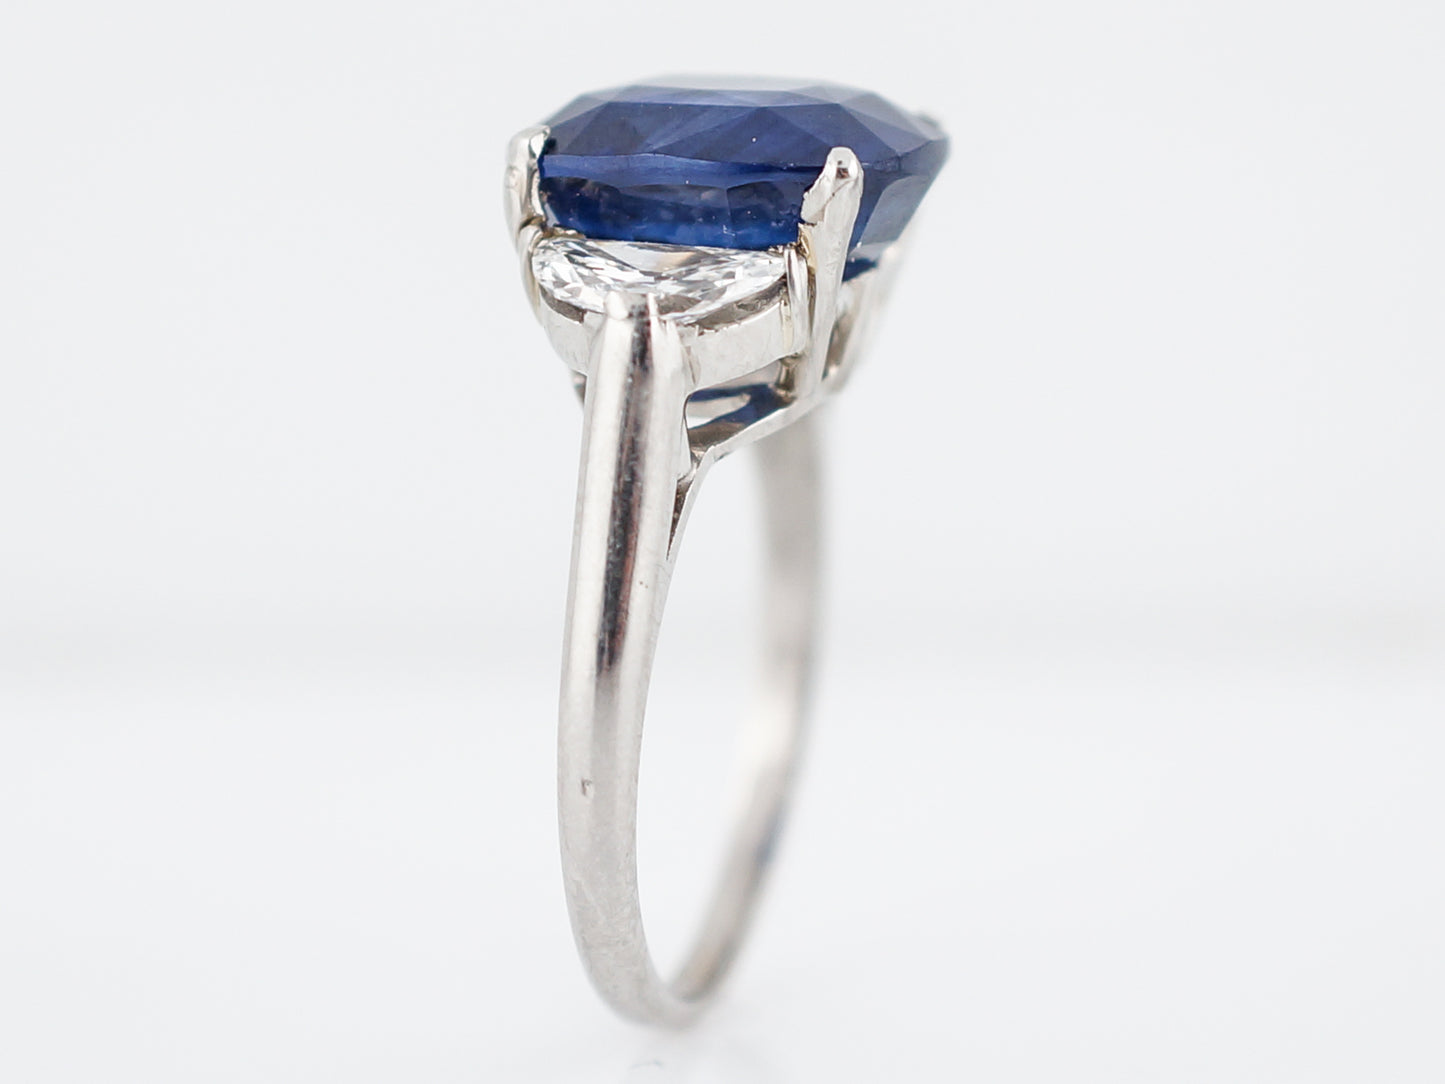 ***RTV***Engagement Ring Modern 6.40 Cushion Cut Sapphire & .60 Half Moon Cut Diamonds in Platinum